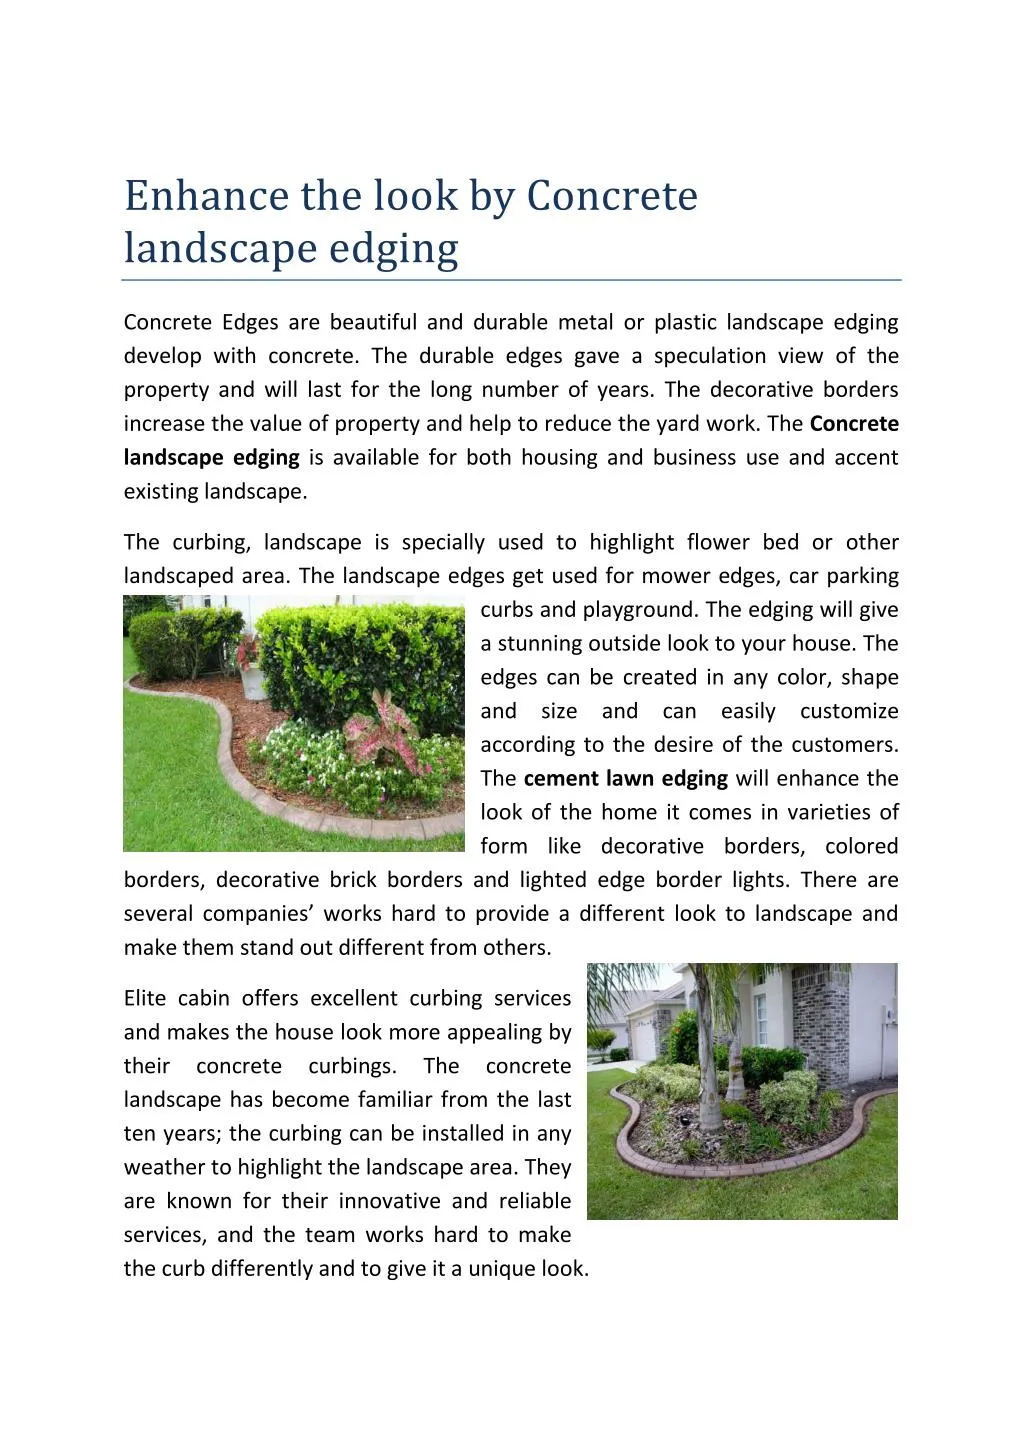 enhance the look by concrete landscape edging